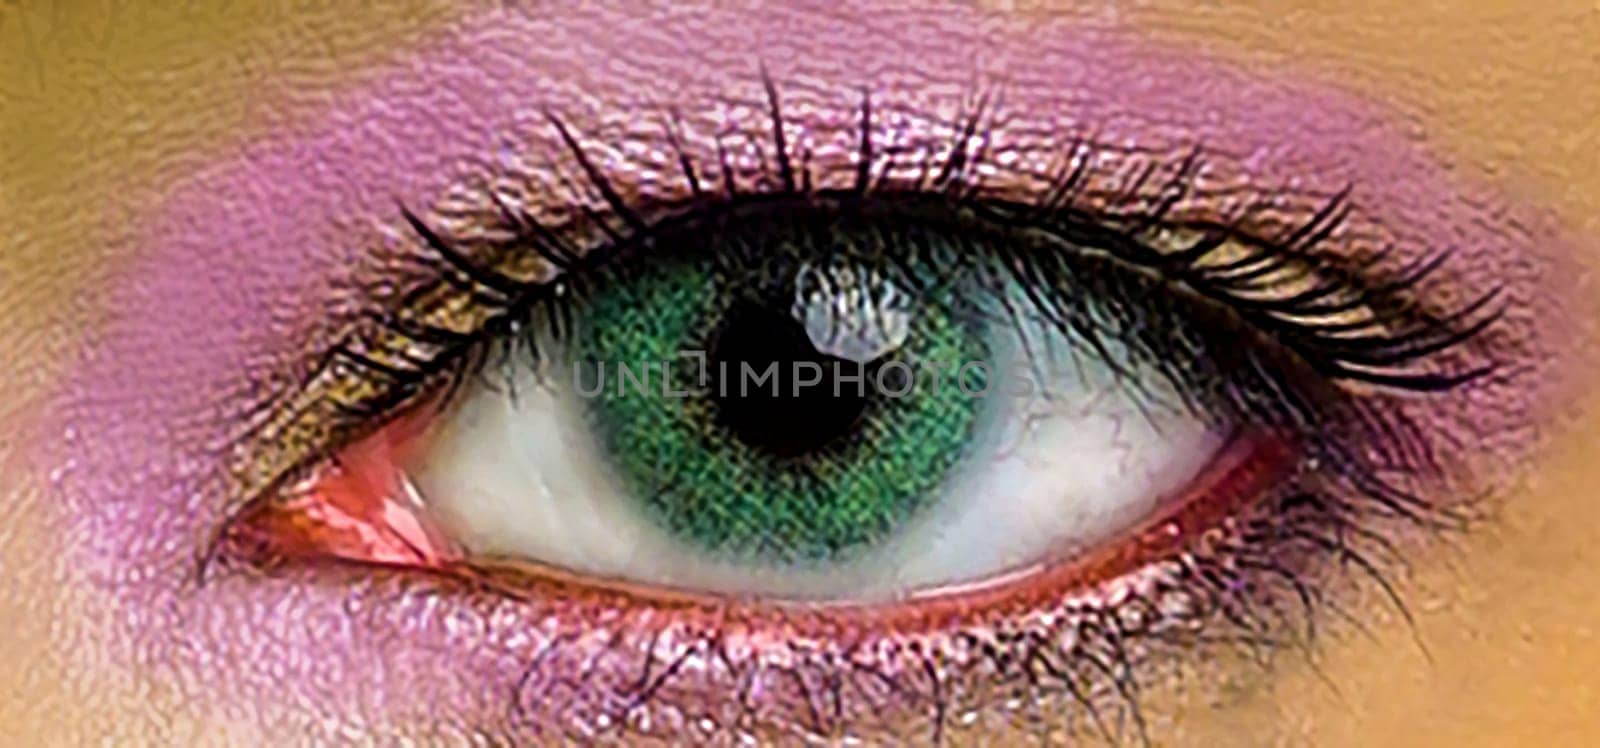 Close up image of healthy human eyes with eyelashes by antoksena